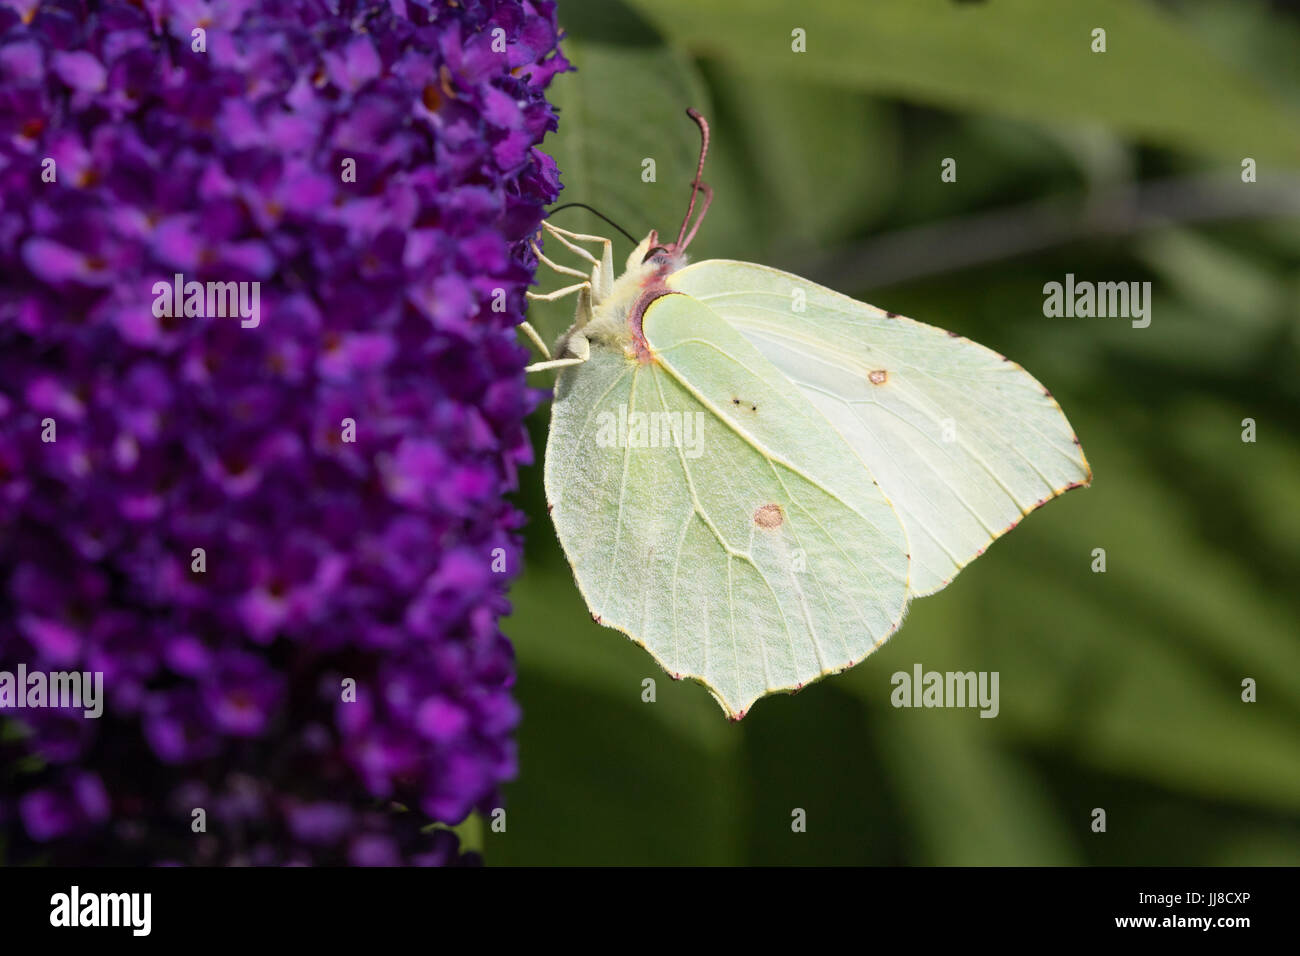 Hembra Brimstone Butterfly, Gonepteryx rhamni, alimentándose de la flor panícula de Buddleja davidii soñar lavendel' Foto de stock